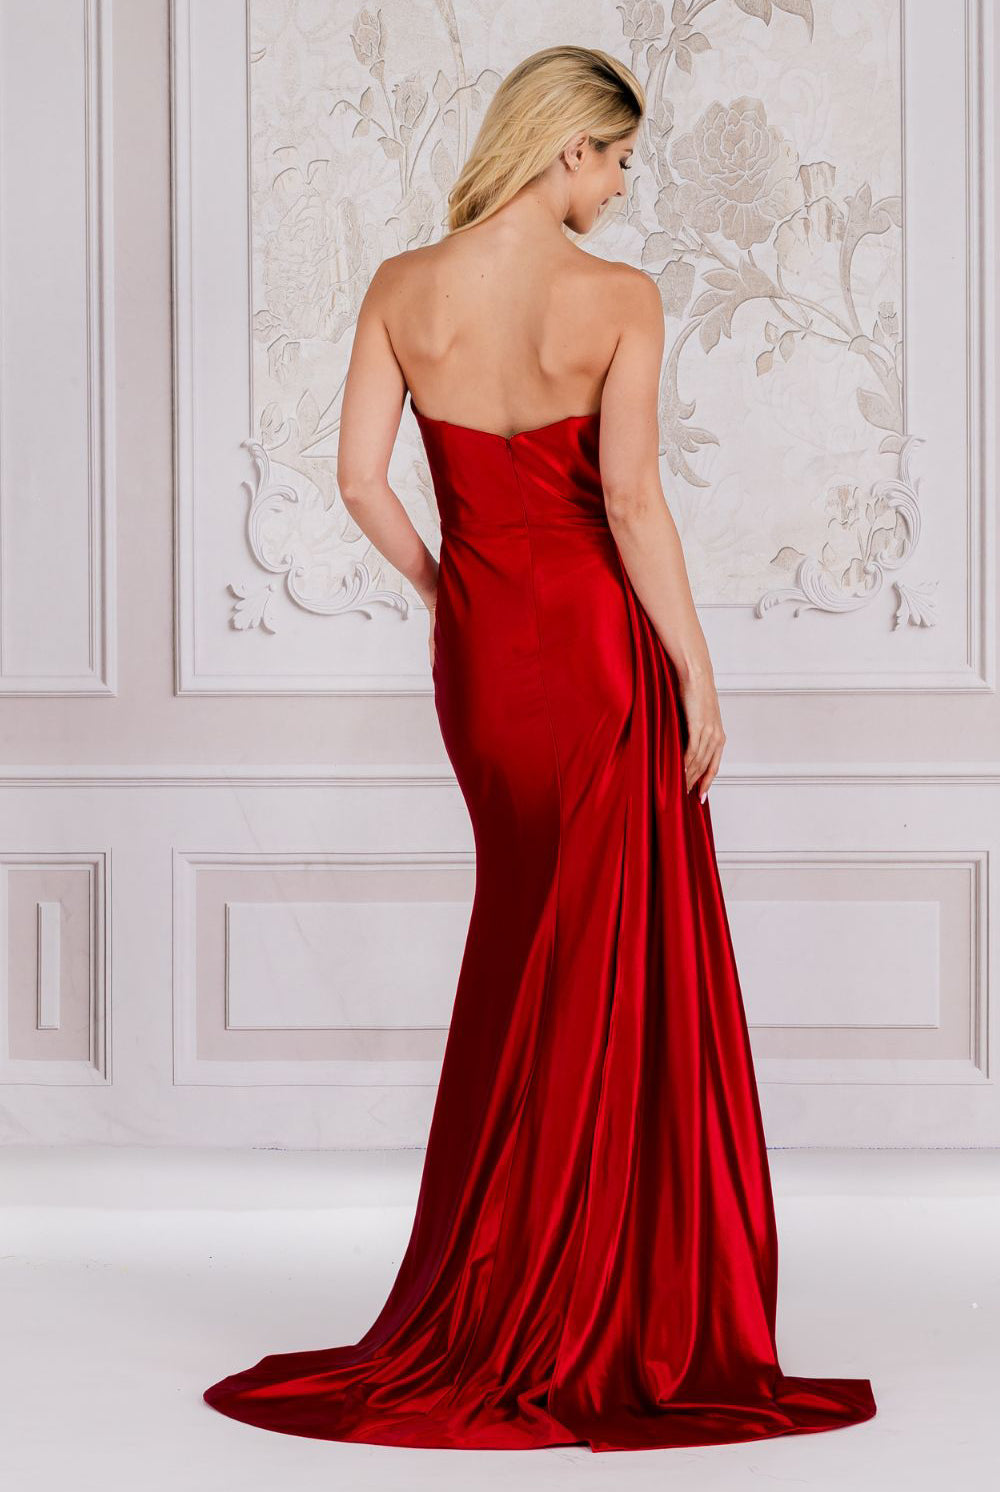 Strapless Embellished Jewel Sweetheart Side Slit Long Prom Dress ACBZ032-Prom Dress-smcfashion.com